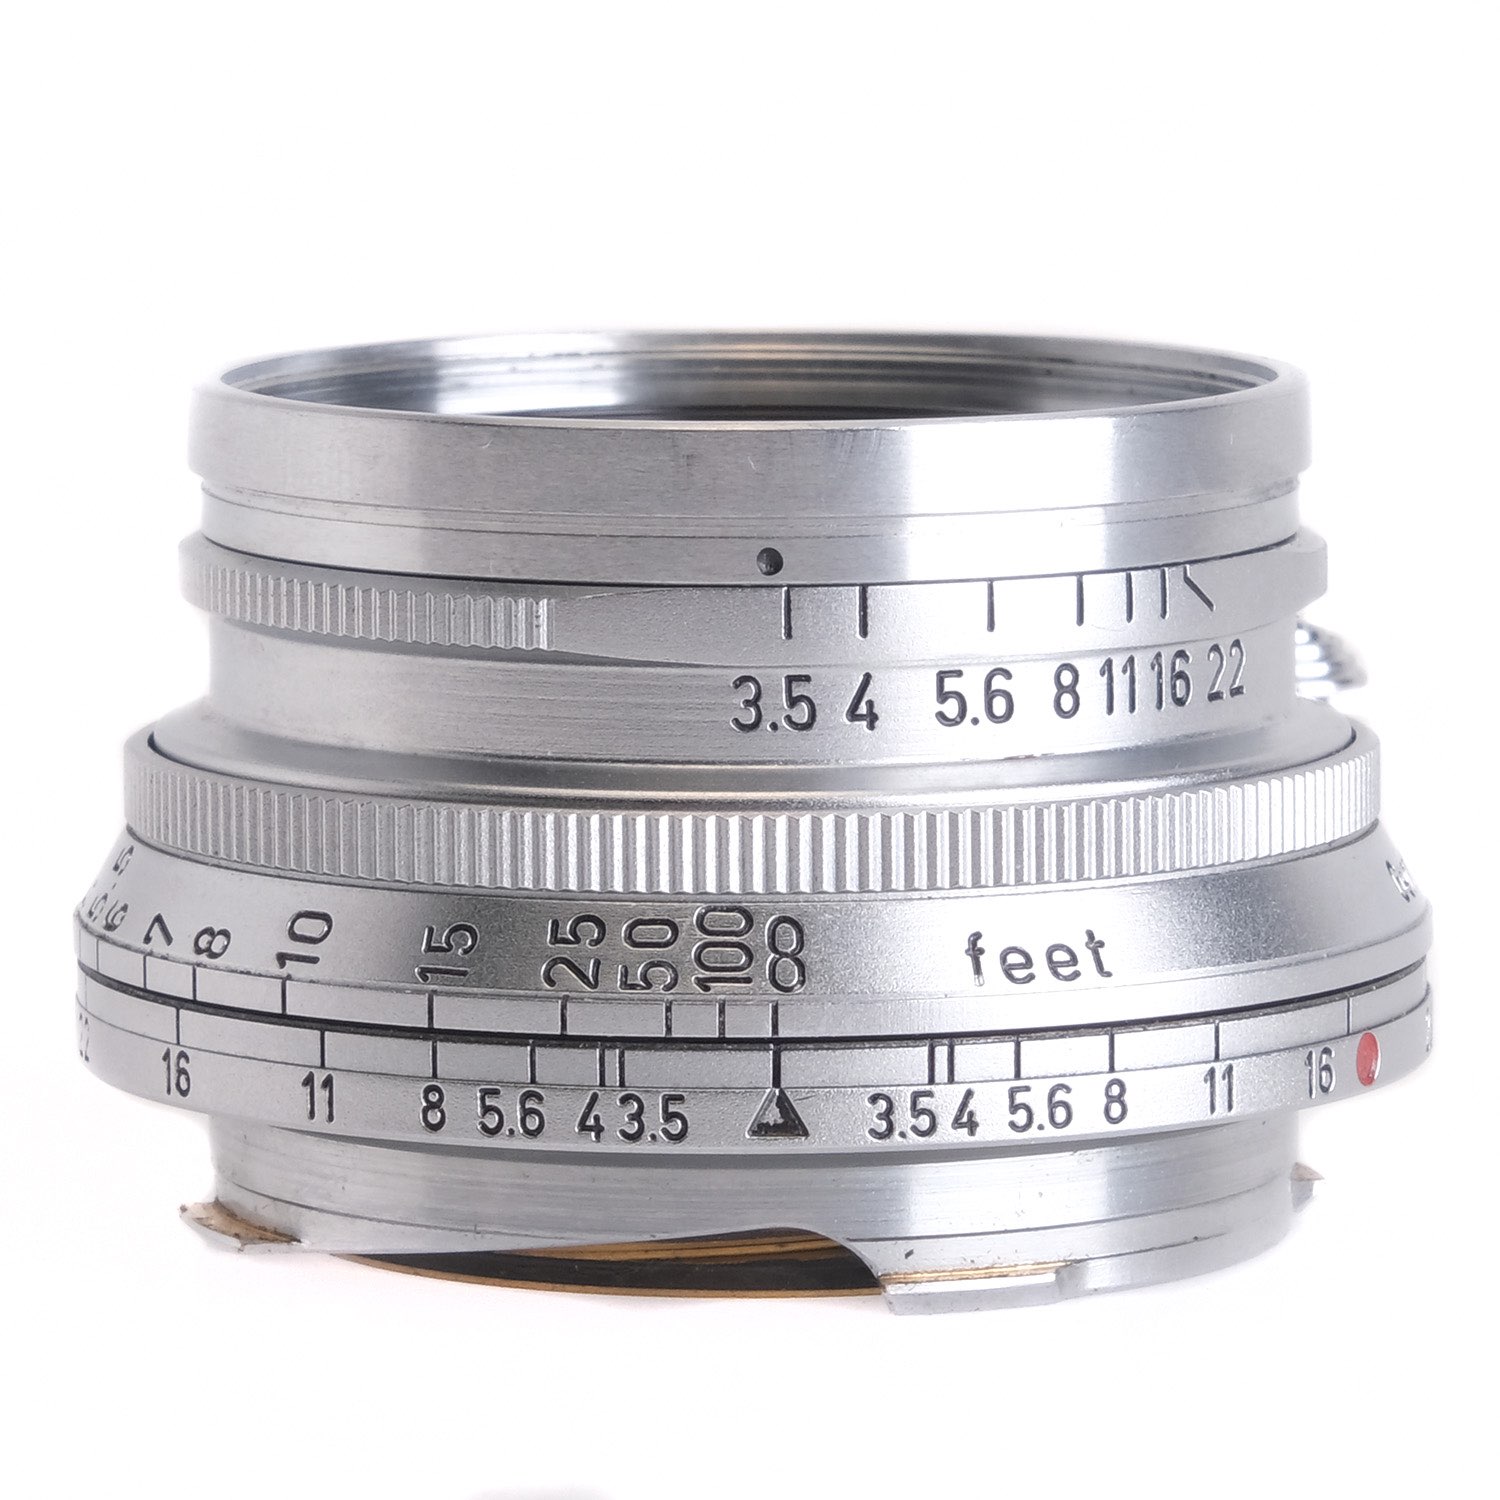 Leica 3.5cm f3.5 Summaron DAG Service 1148729